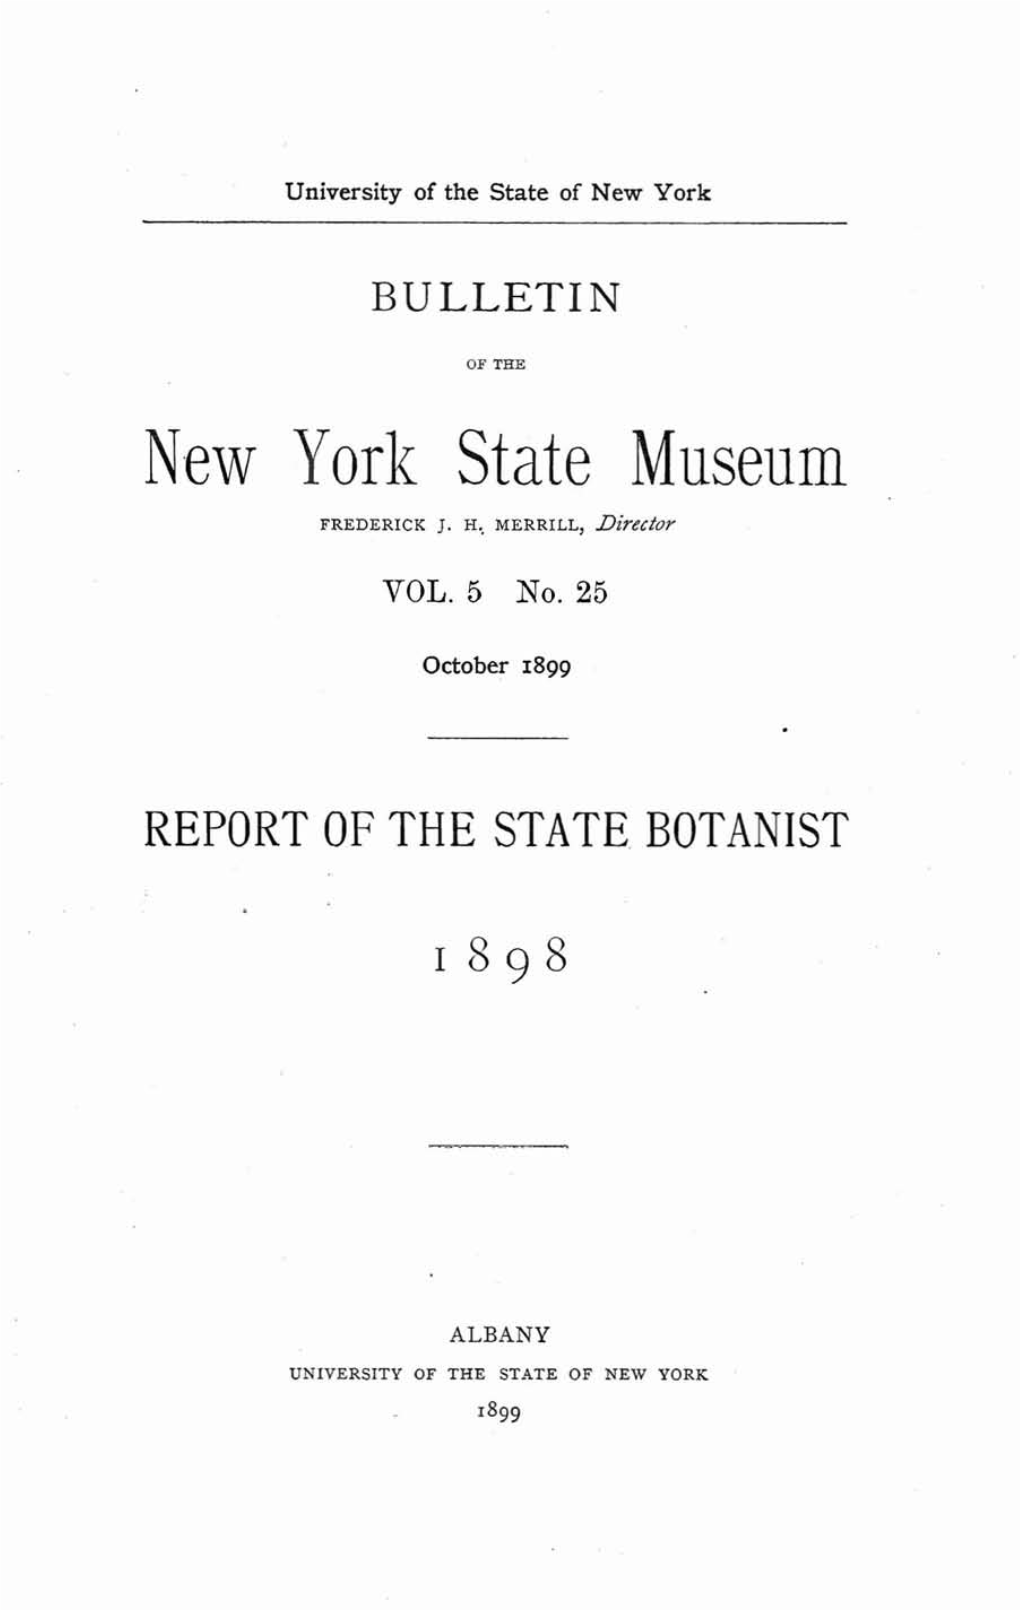 New York State Museum FREDERICK J